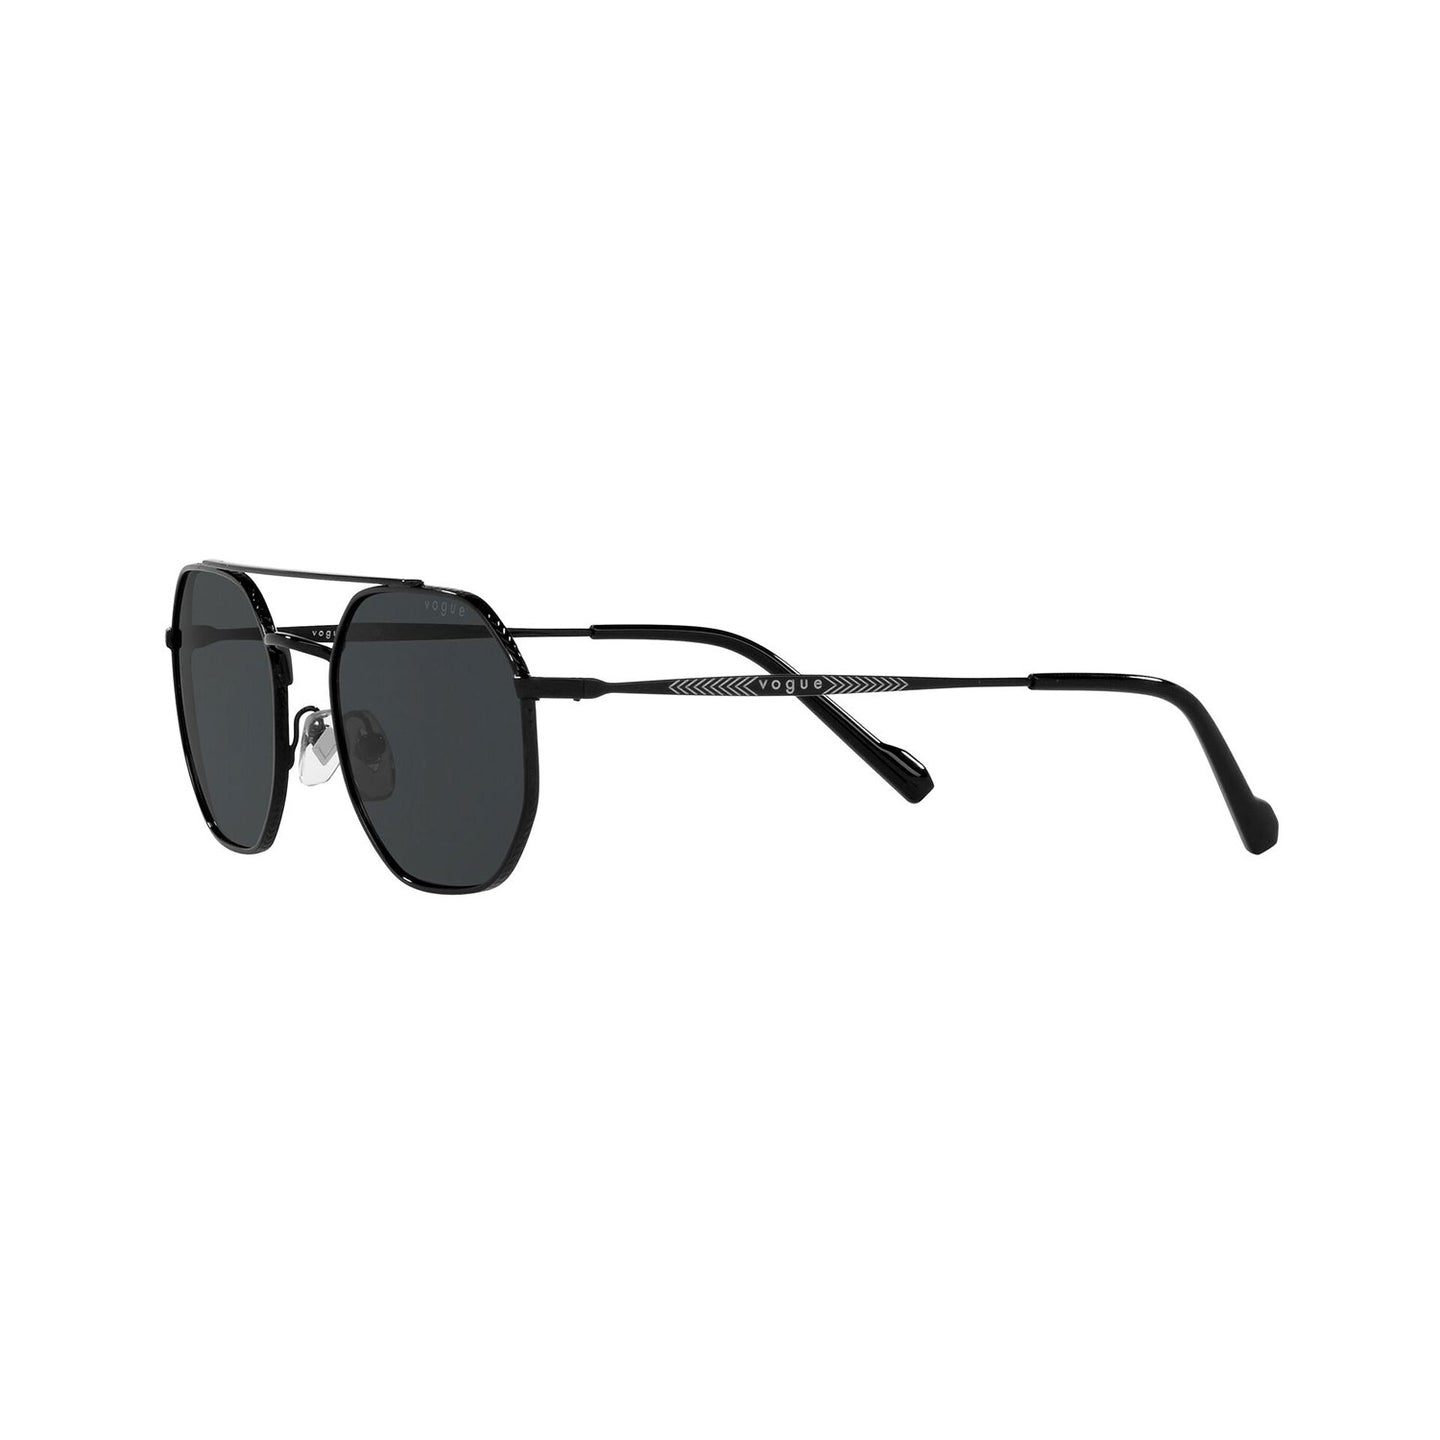 sunglasses vogue vo 4193s color 352/87 black 